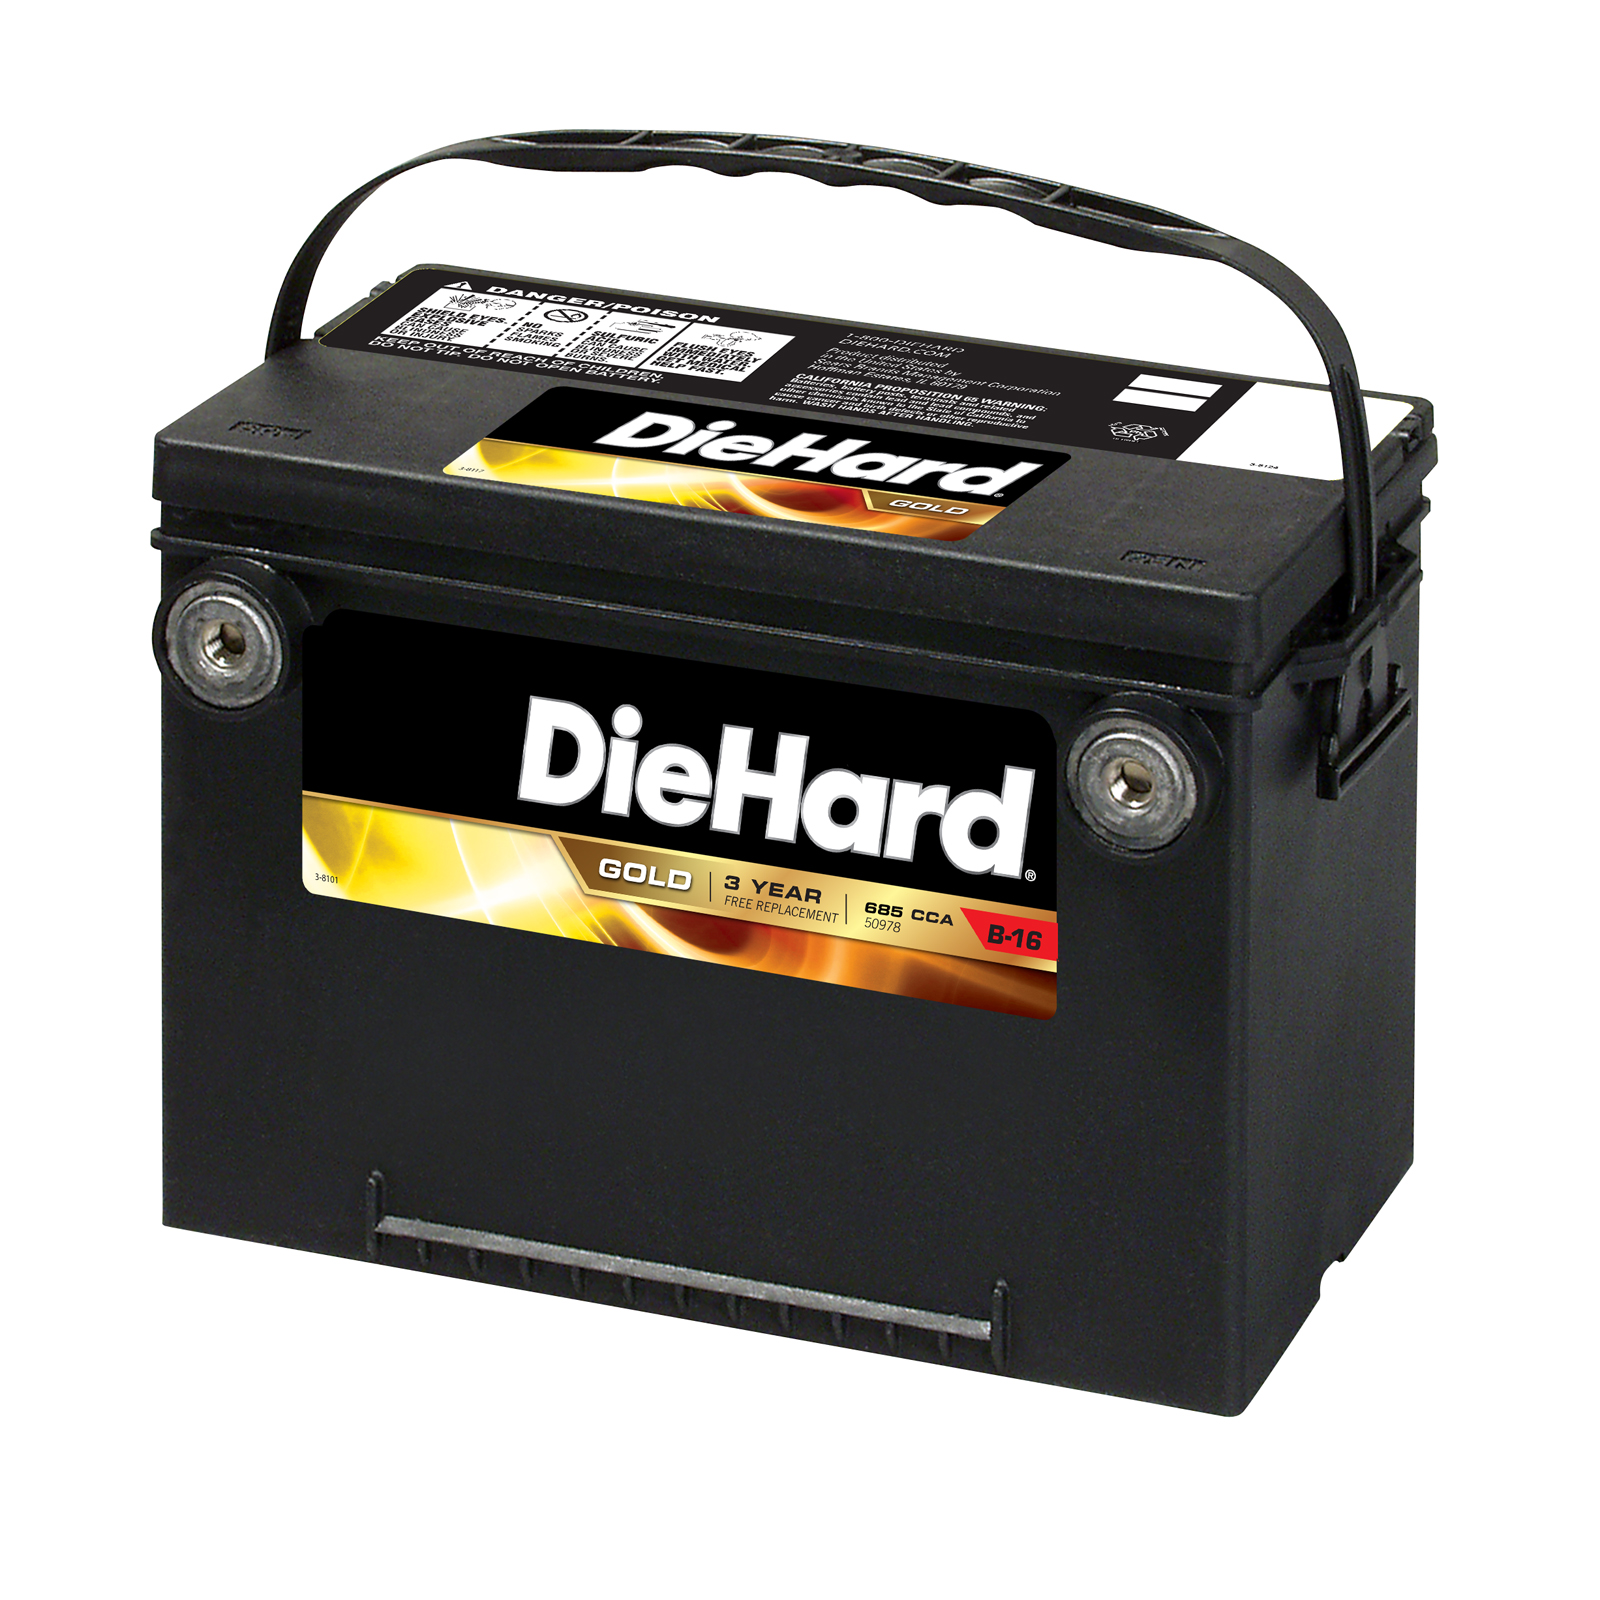 DieHard Gold Automotive Battery 50978 - Group Size EP-78